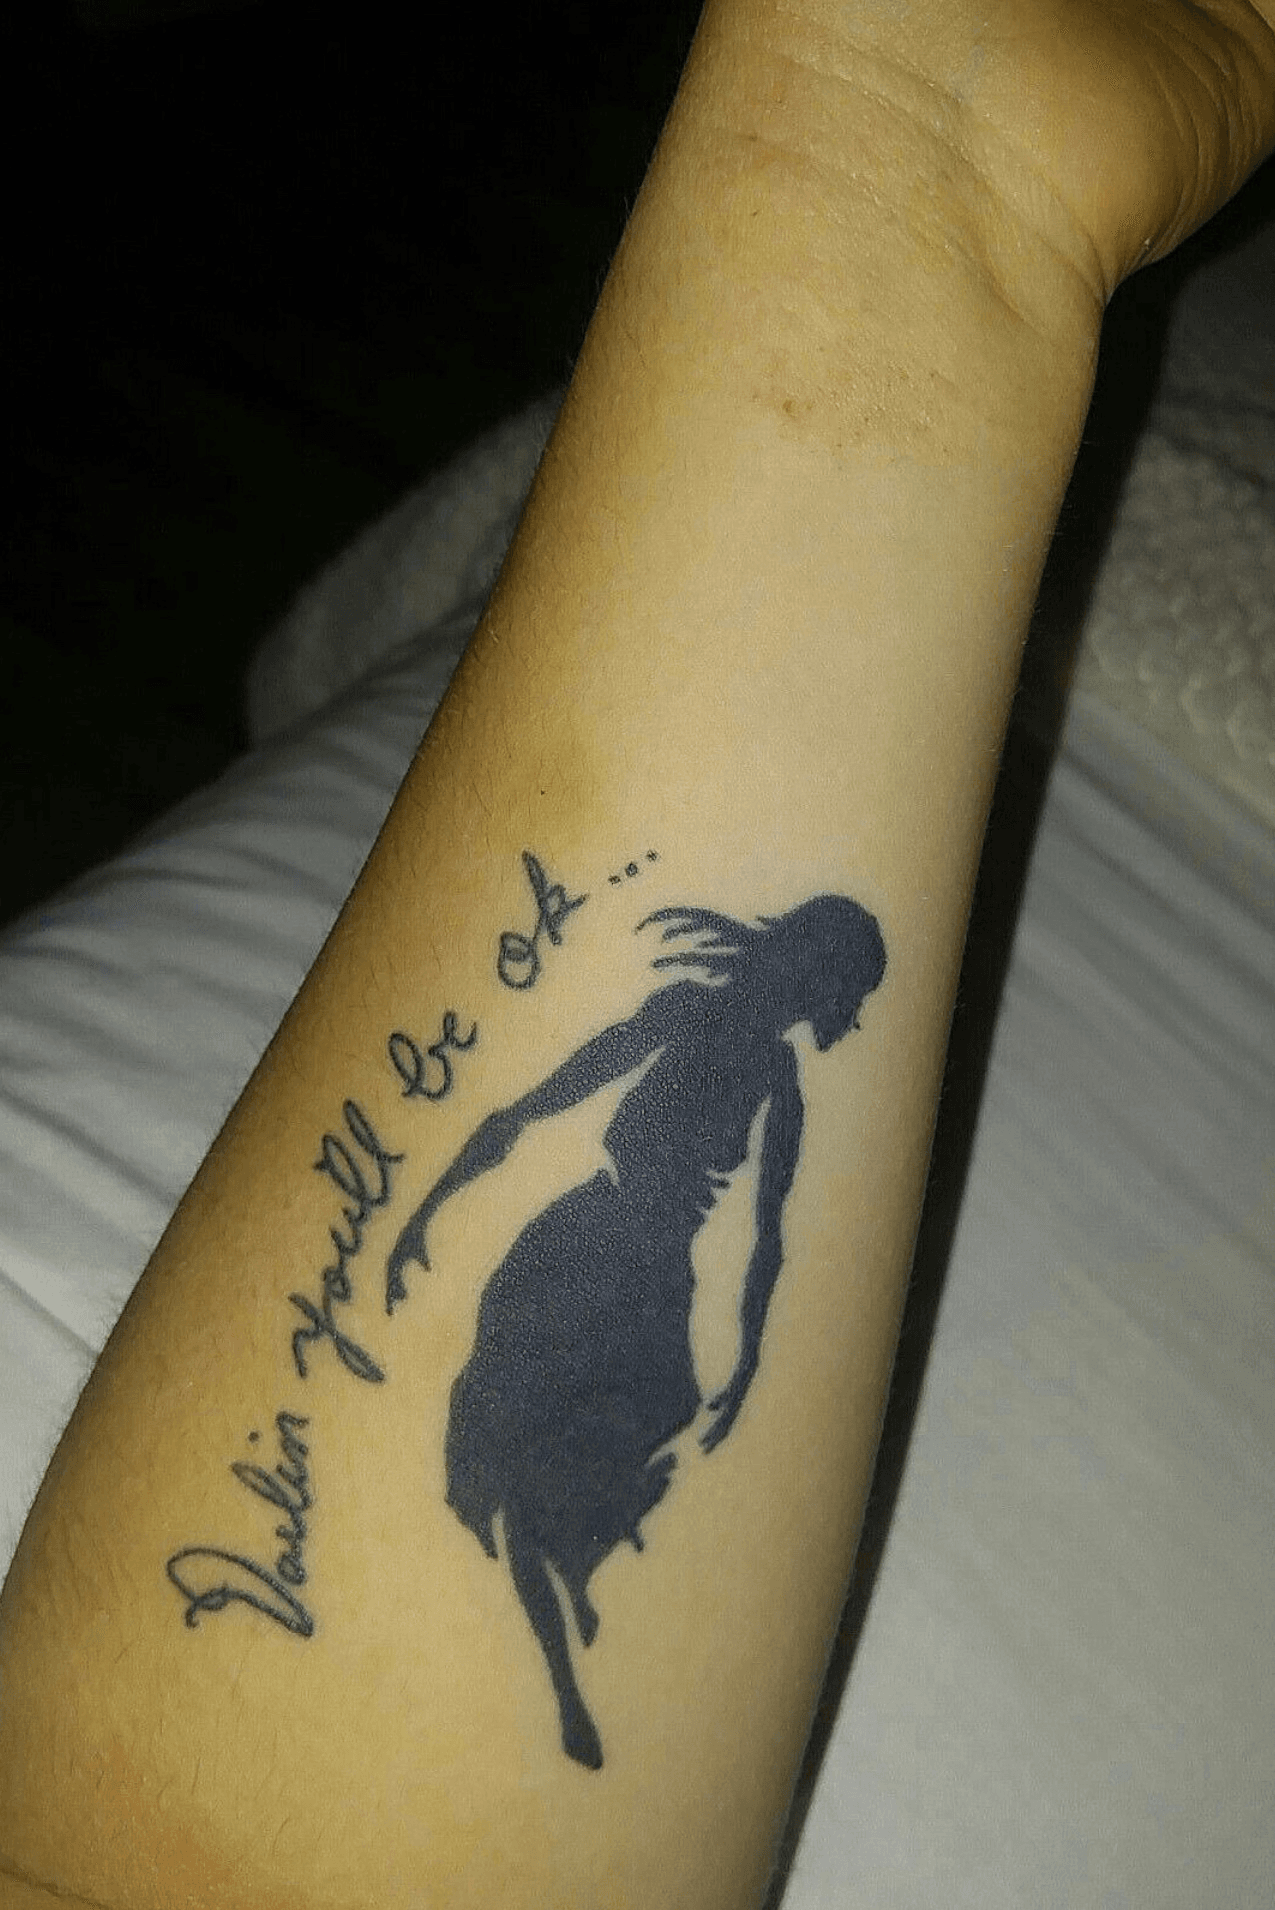 Jennifer on Twitter darlingyoullbeok piercetheveil ghostgirl my next  tattoo httpstcoHTdMAarcA0  Twitter